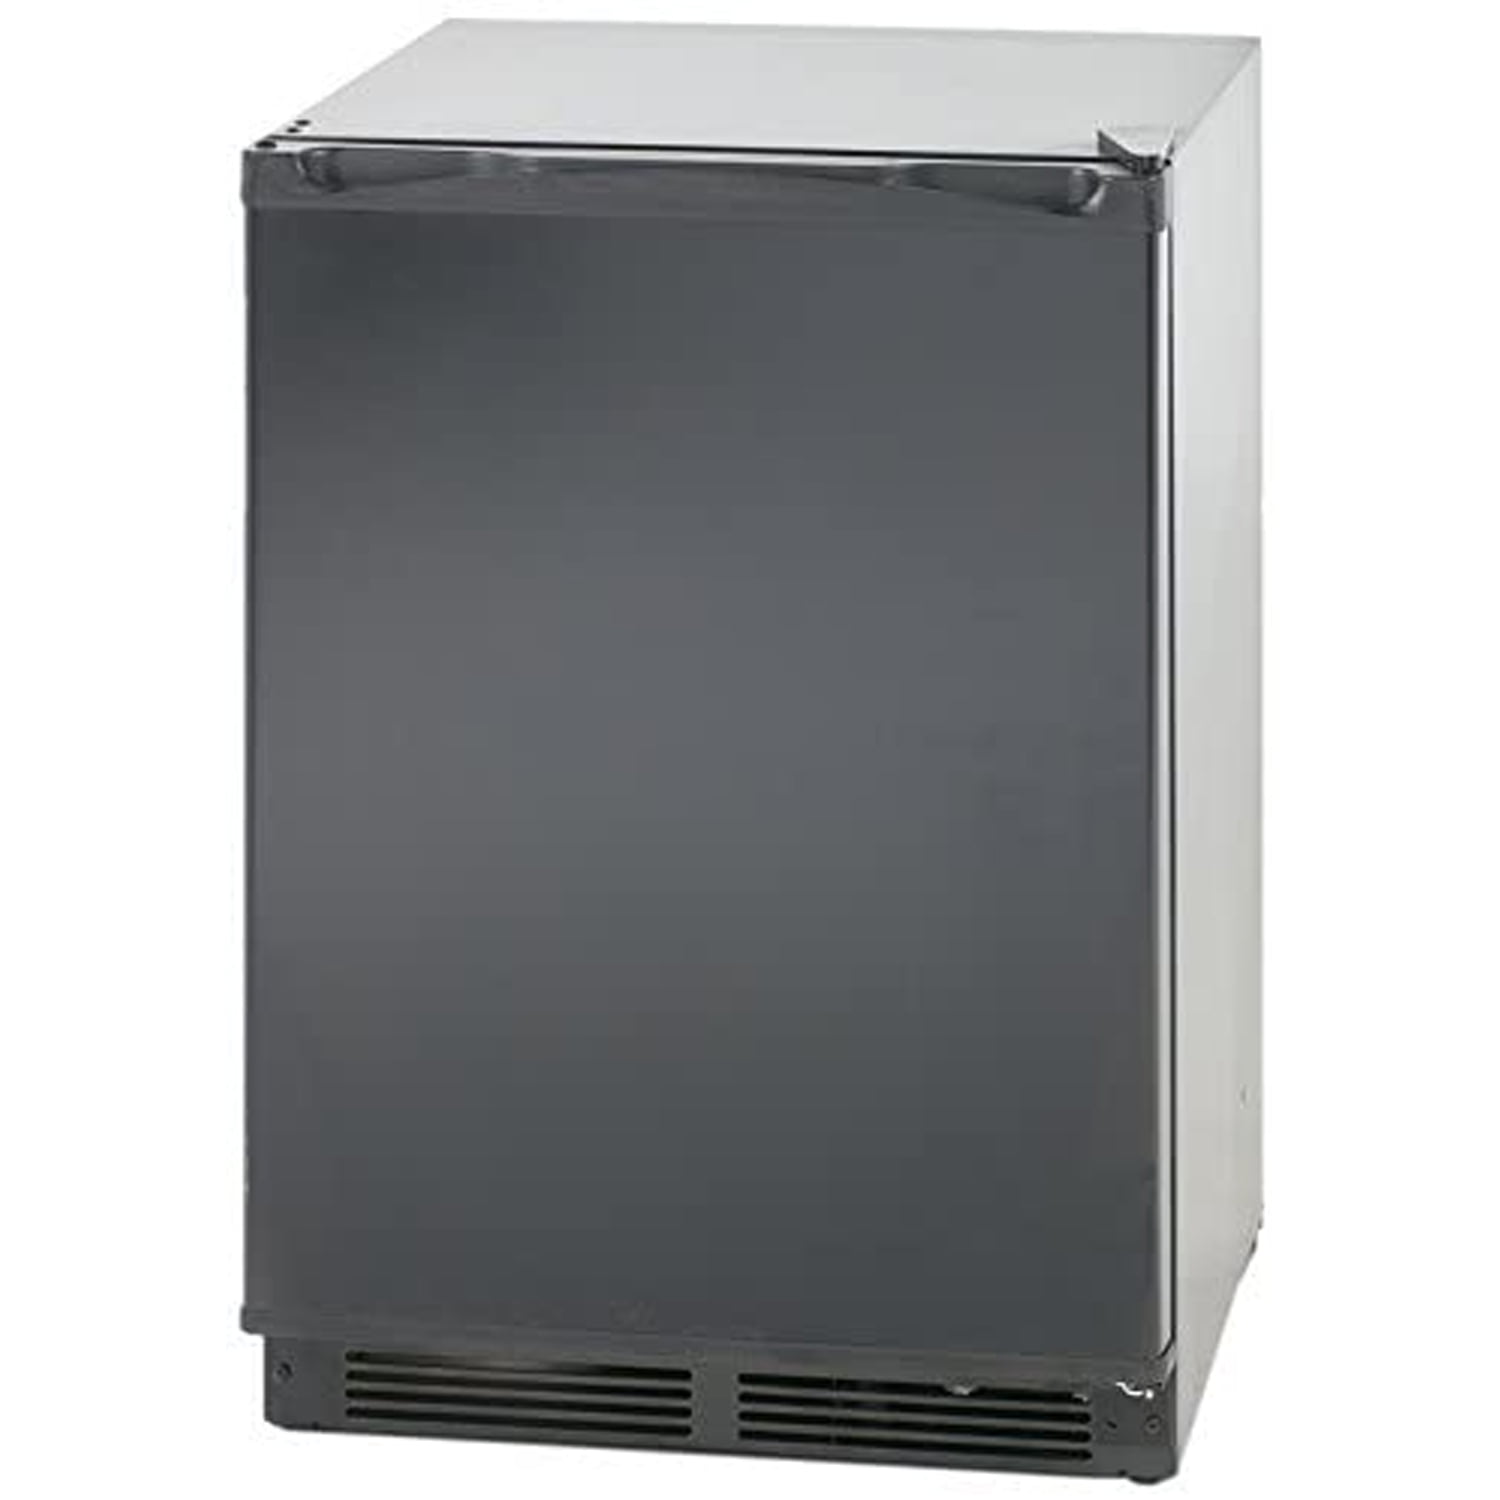 Avanti Retro Series Compact Refrigerator and Freezer, 3.0 cu. ft., in Robin  Egg Blue (RMRT30X6BL-IS)